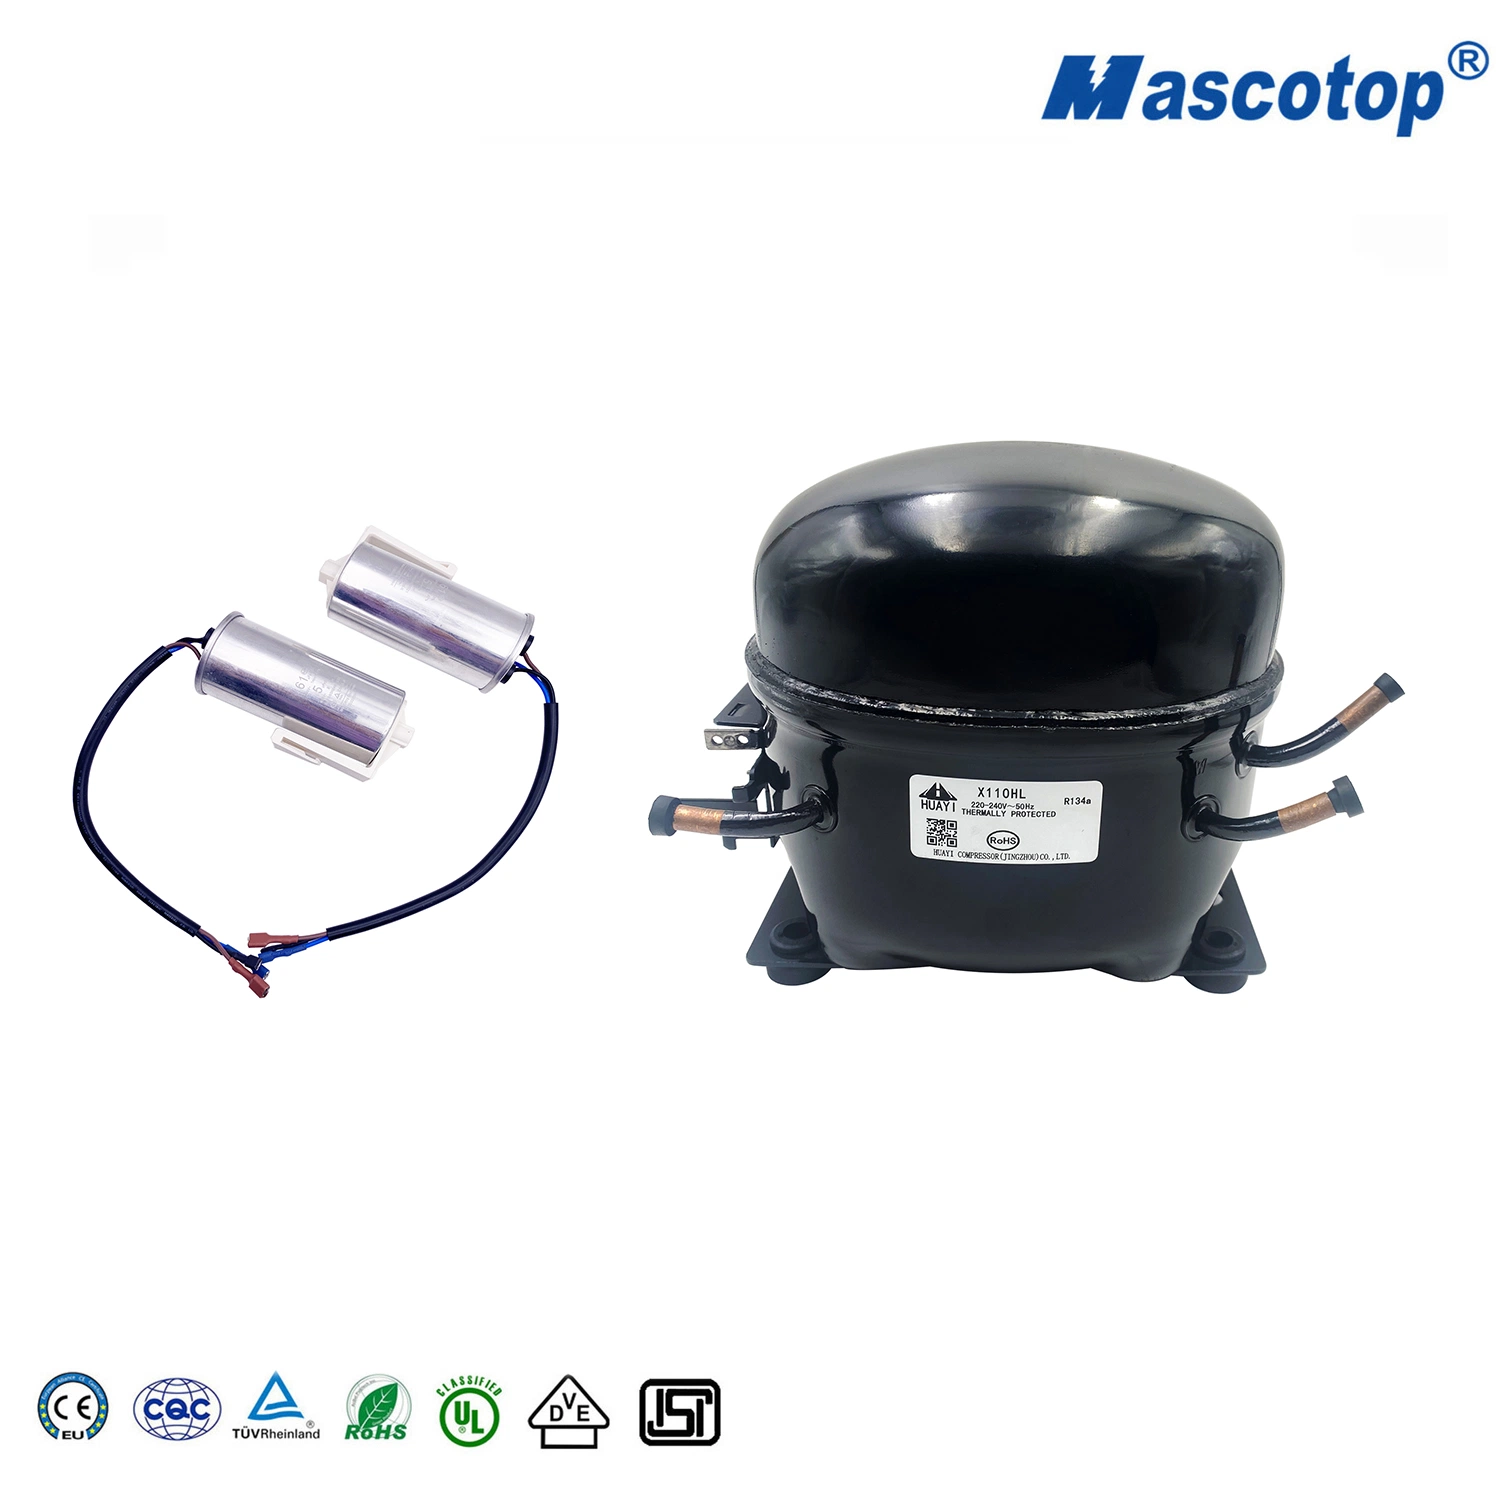 Mascotop Refrigerator Compressor Capacitor Capacitor with Best Price